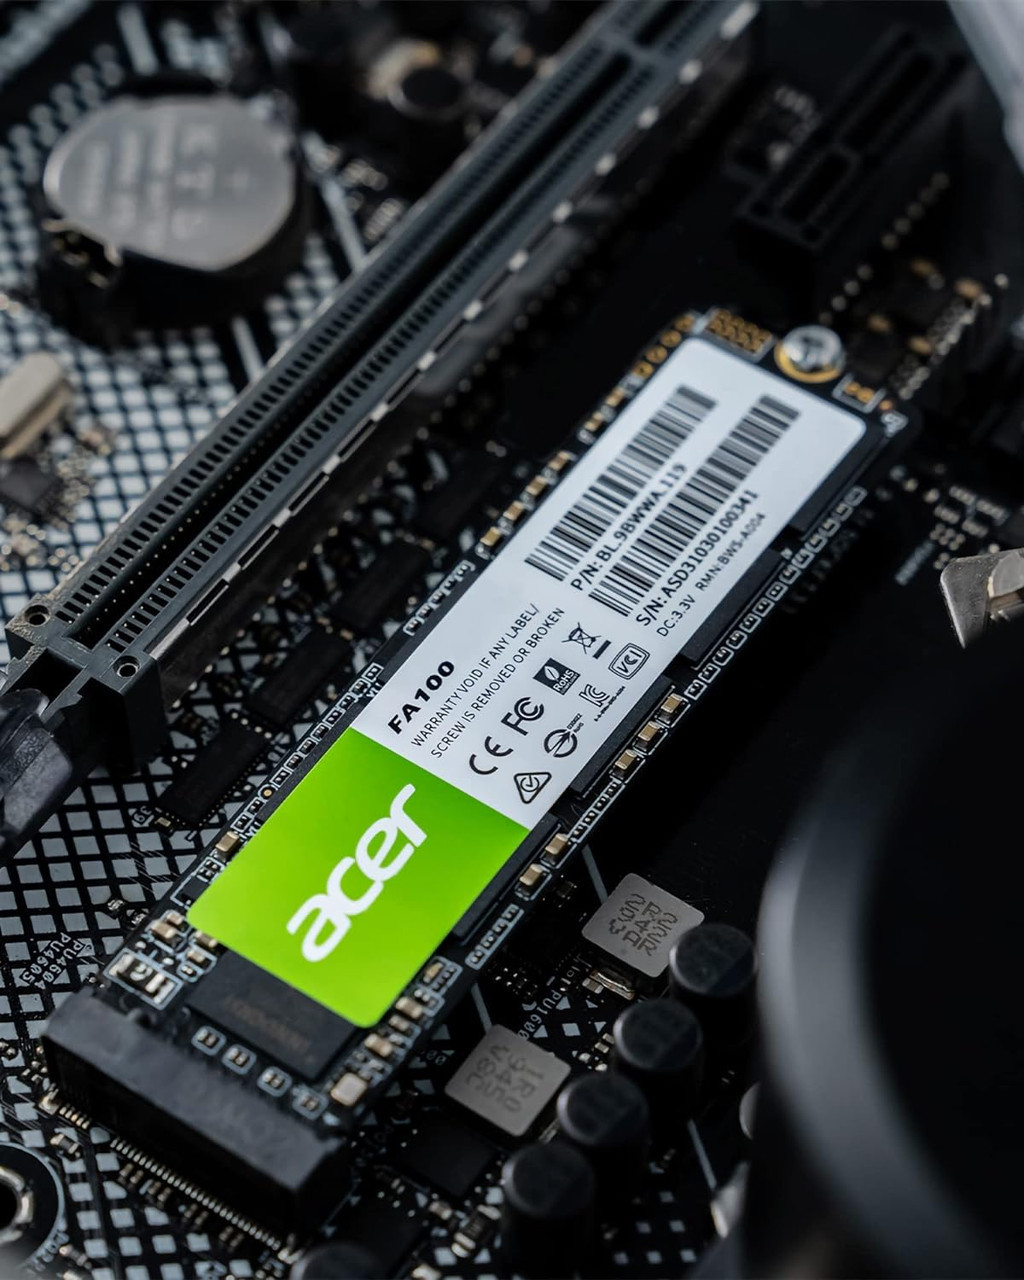 Acer FA100 512GB - M.2 2280 PCIe Gen3 x 4 NVMe Interface, 8 Gb/s, 3D NAND Internal SSD Up to 3200 MB/s (BL.9BWWA.119)